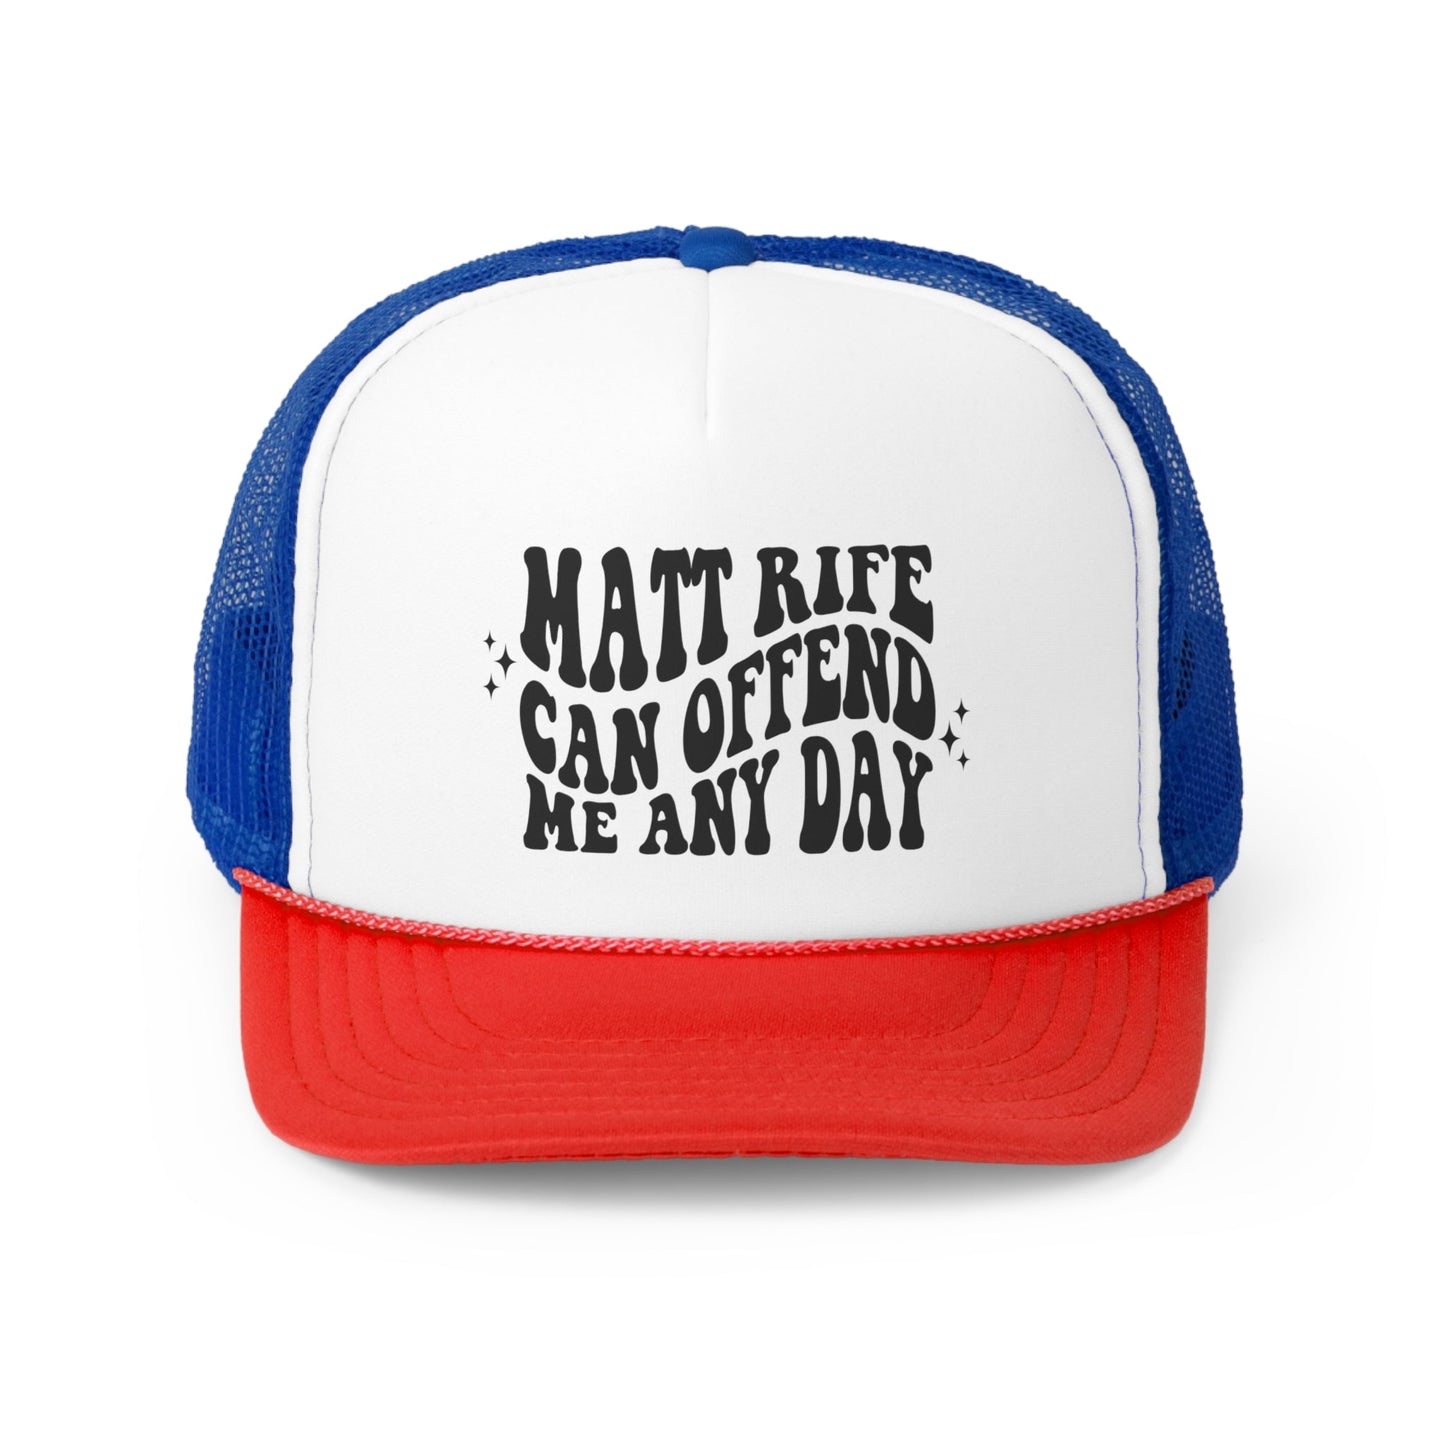 Matt Rife Can Offend Me Any Day Trucker Hat, Matt Rife Retro Trucker Cap